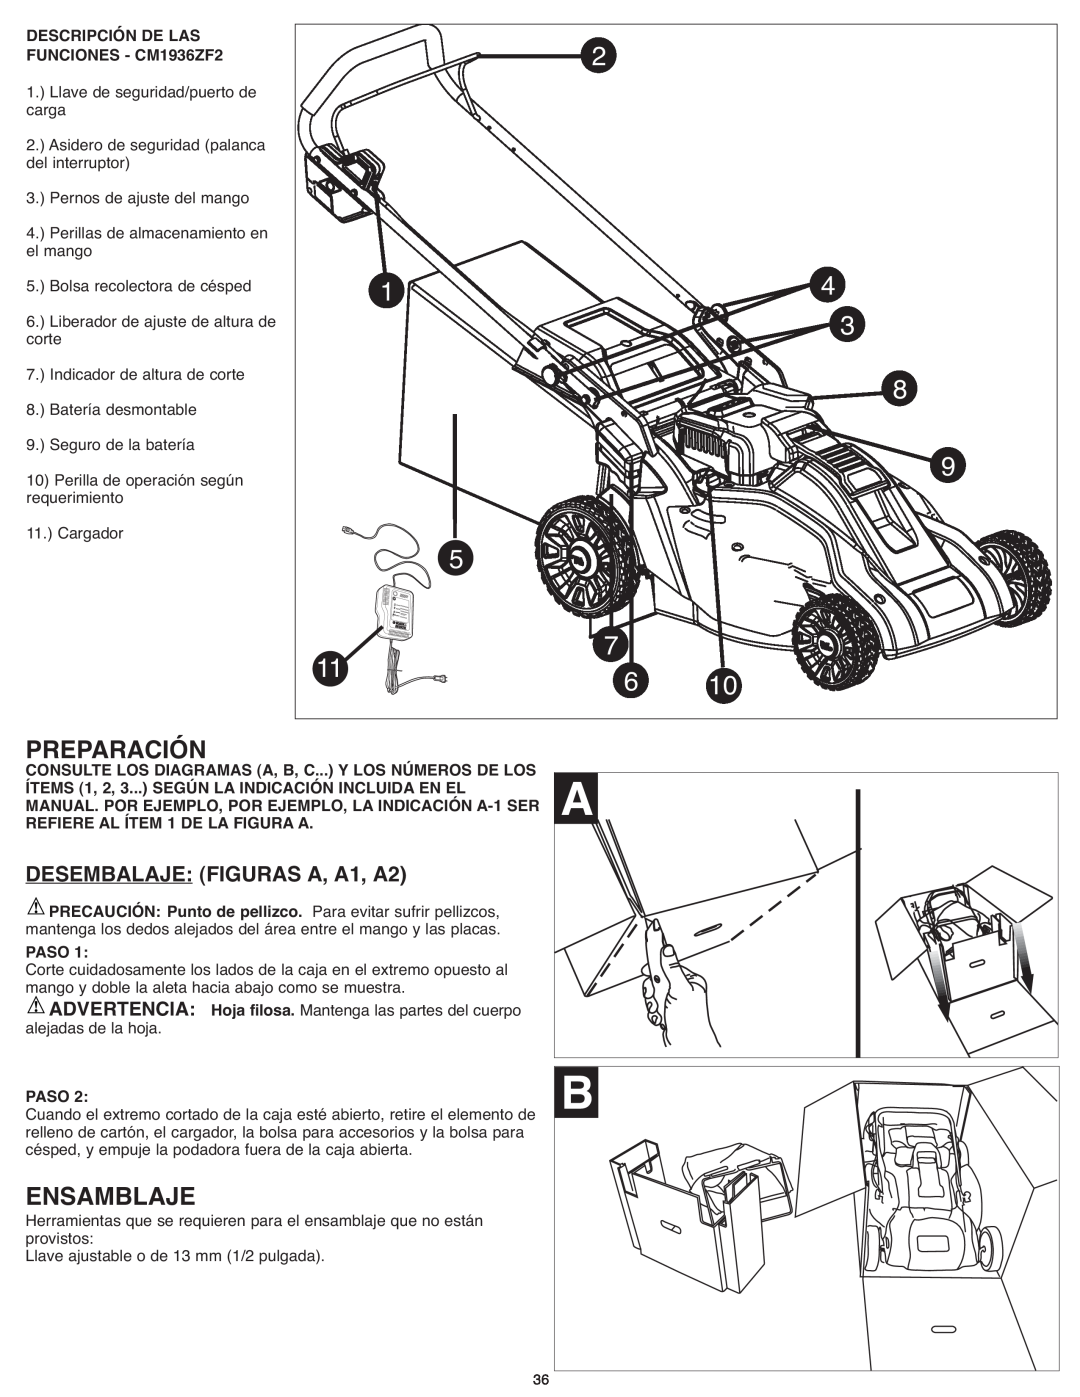 Black & Decker CM1936ZF2 instruction manual Preparación, Ensamblaje, DESEMBALAJE:FIGURAS A, A1, A2 